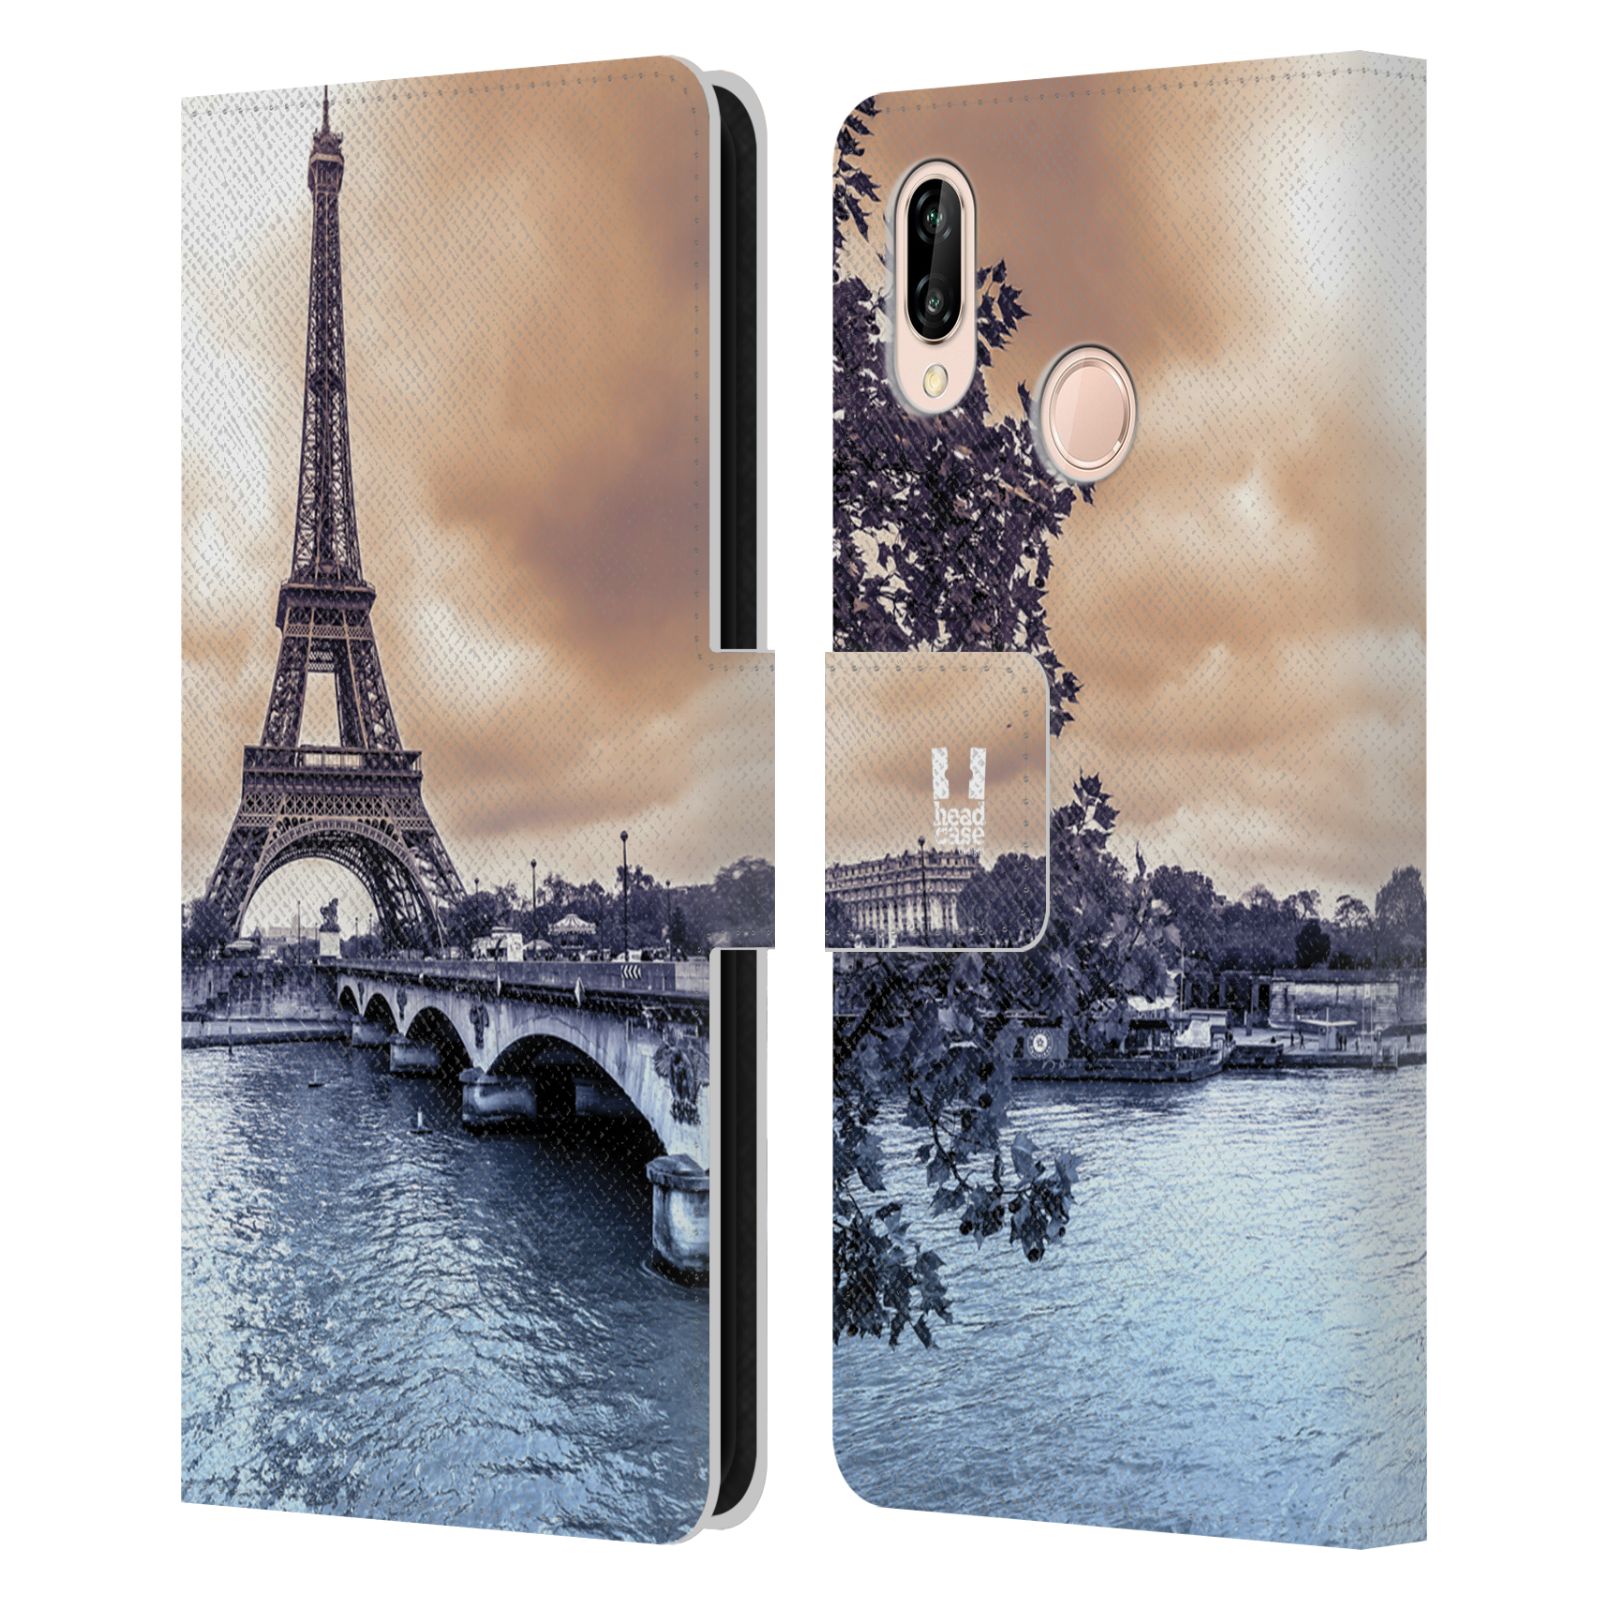 Pouzdro pro mobil Huawei P20 LITE - Eiffelova věž Paříž - Francie